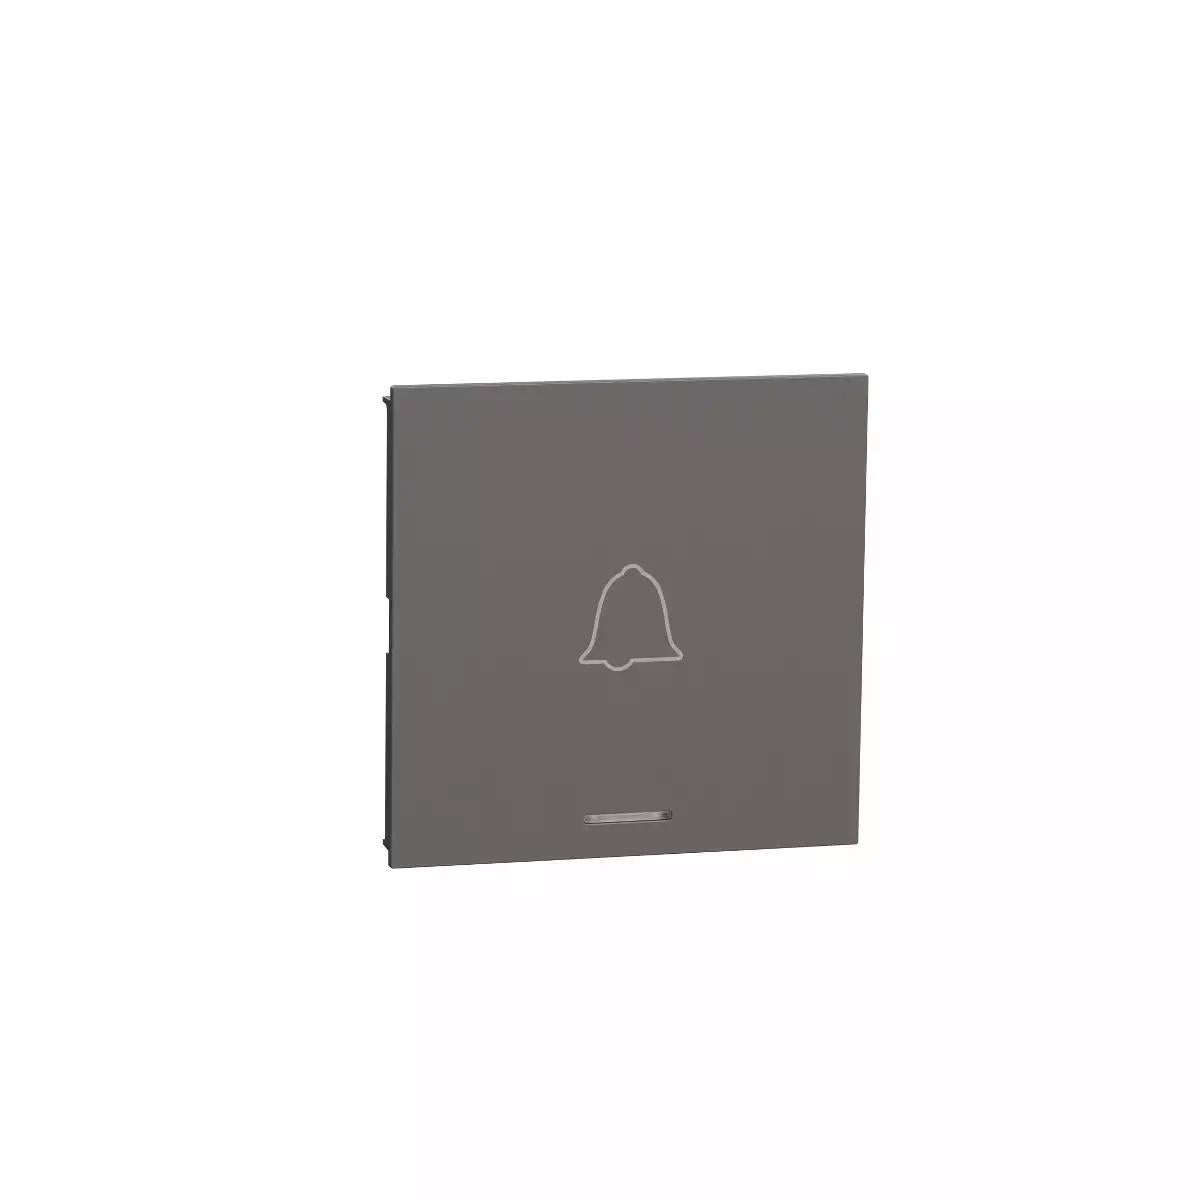 Bell Switch, Avataron A, 10A 250V, E sized, Black